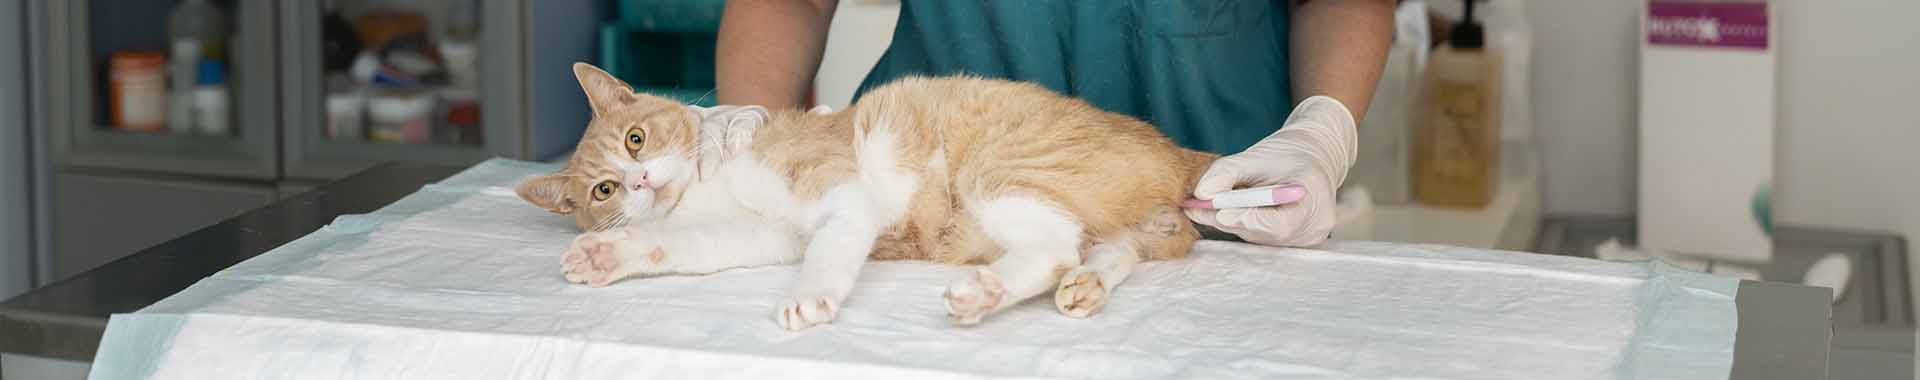 consultas-veterinarias-frecuentes-gatos